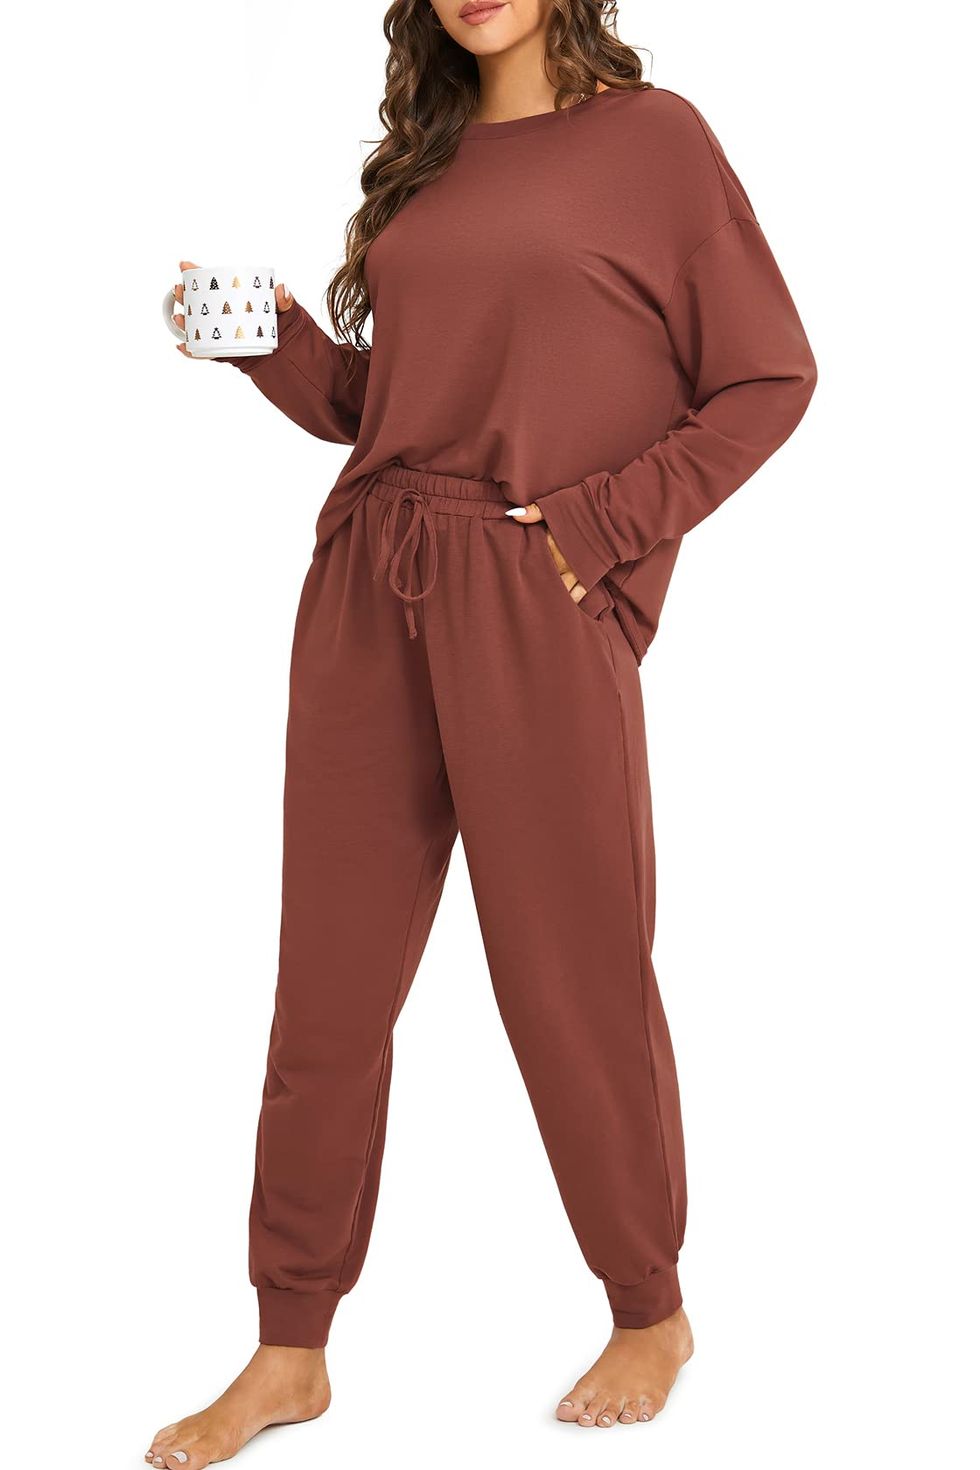 Women's Two-Piece Pajama Set